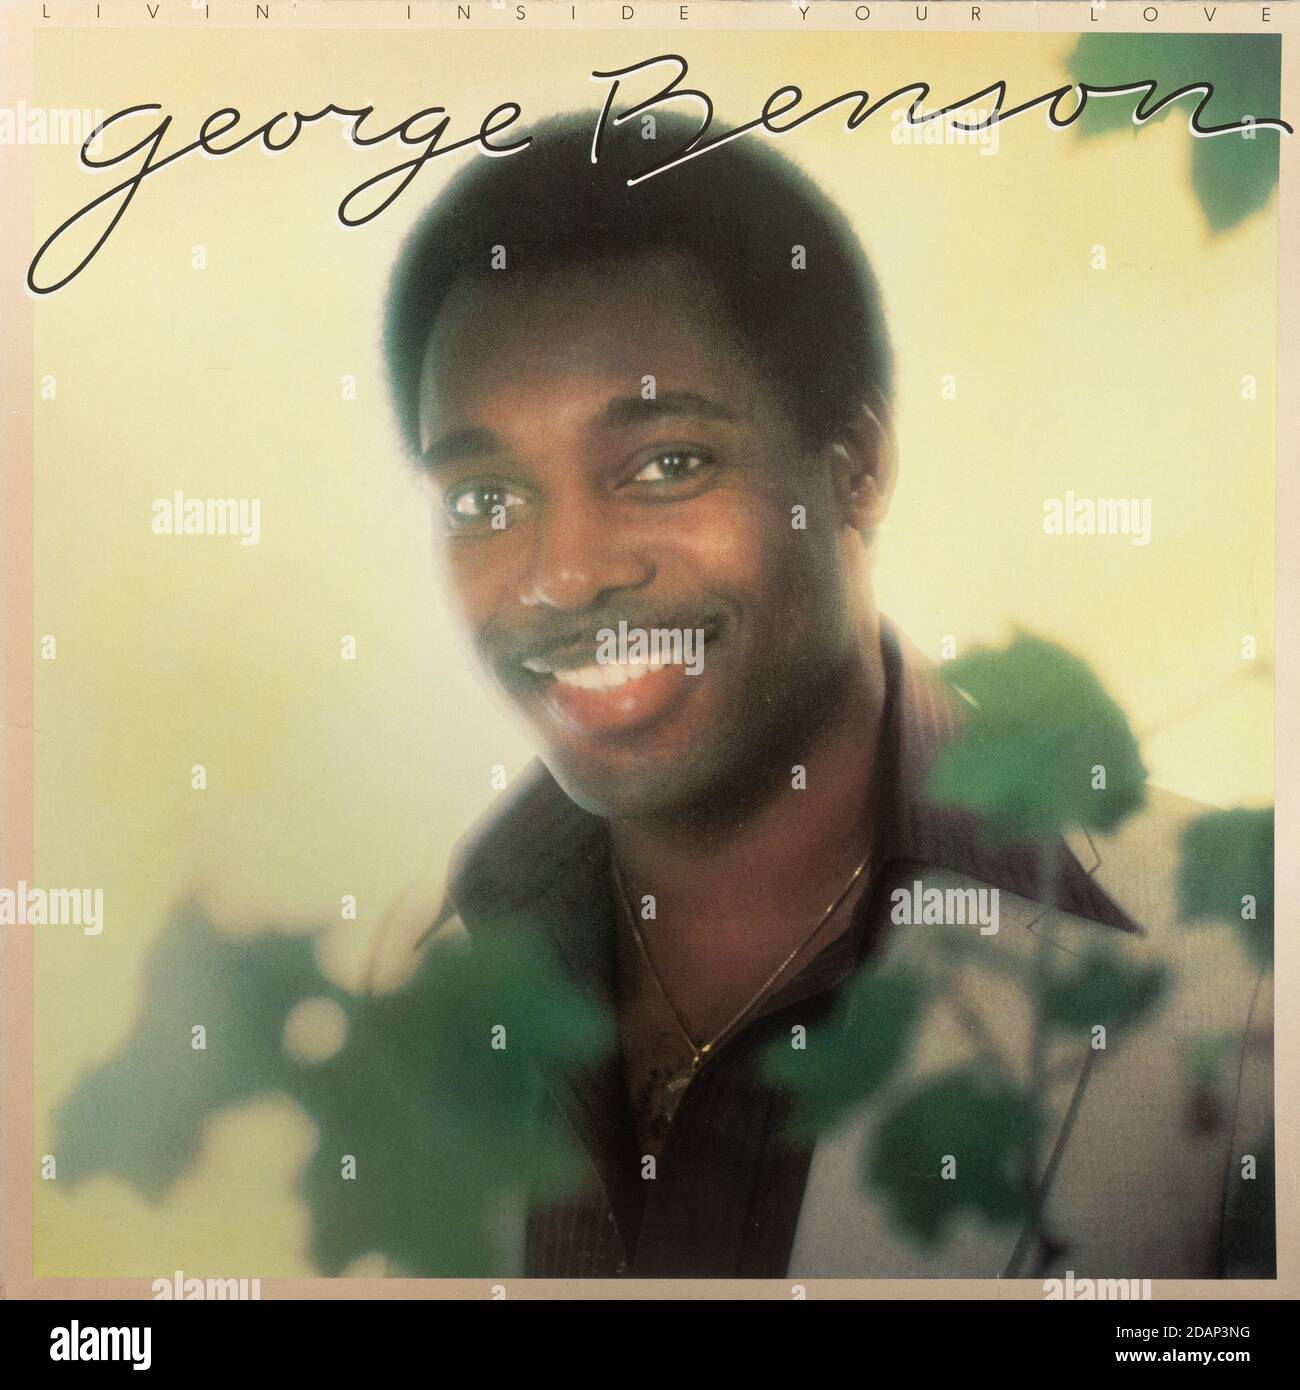 George Benson Livin' Inside Your Love, Vinyl LP Album Cover Stockfoto